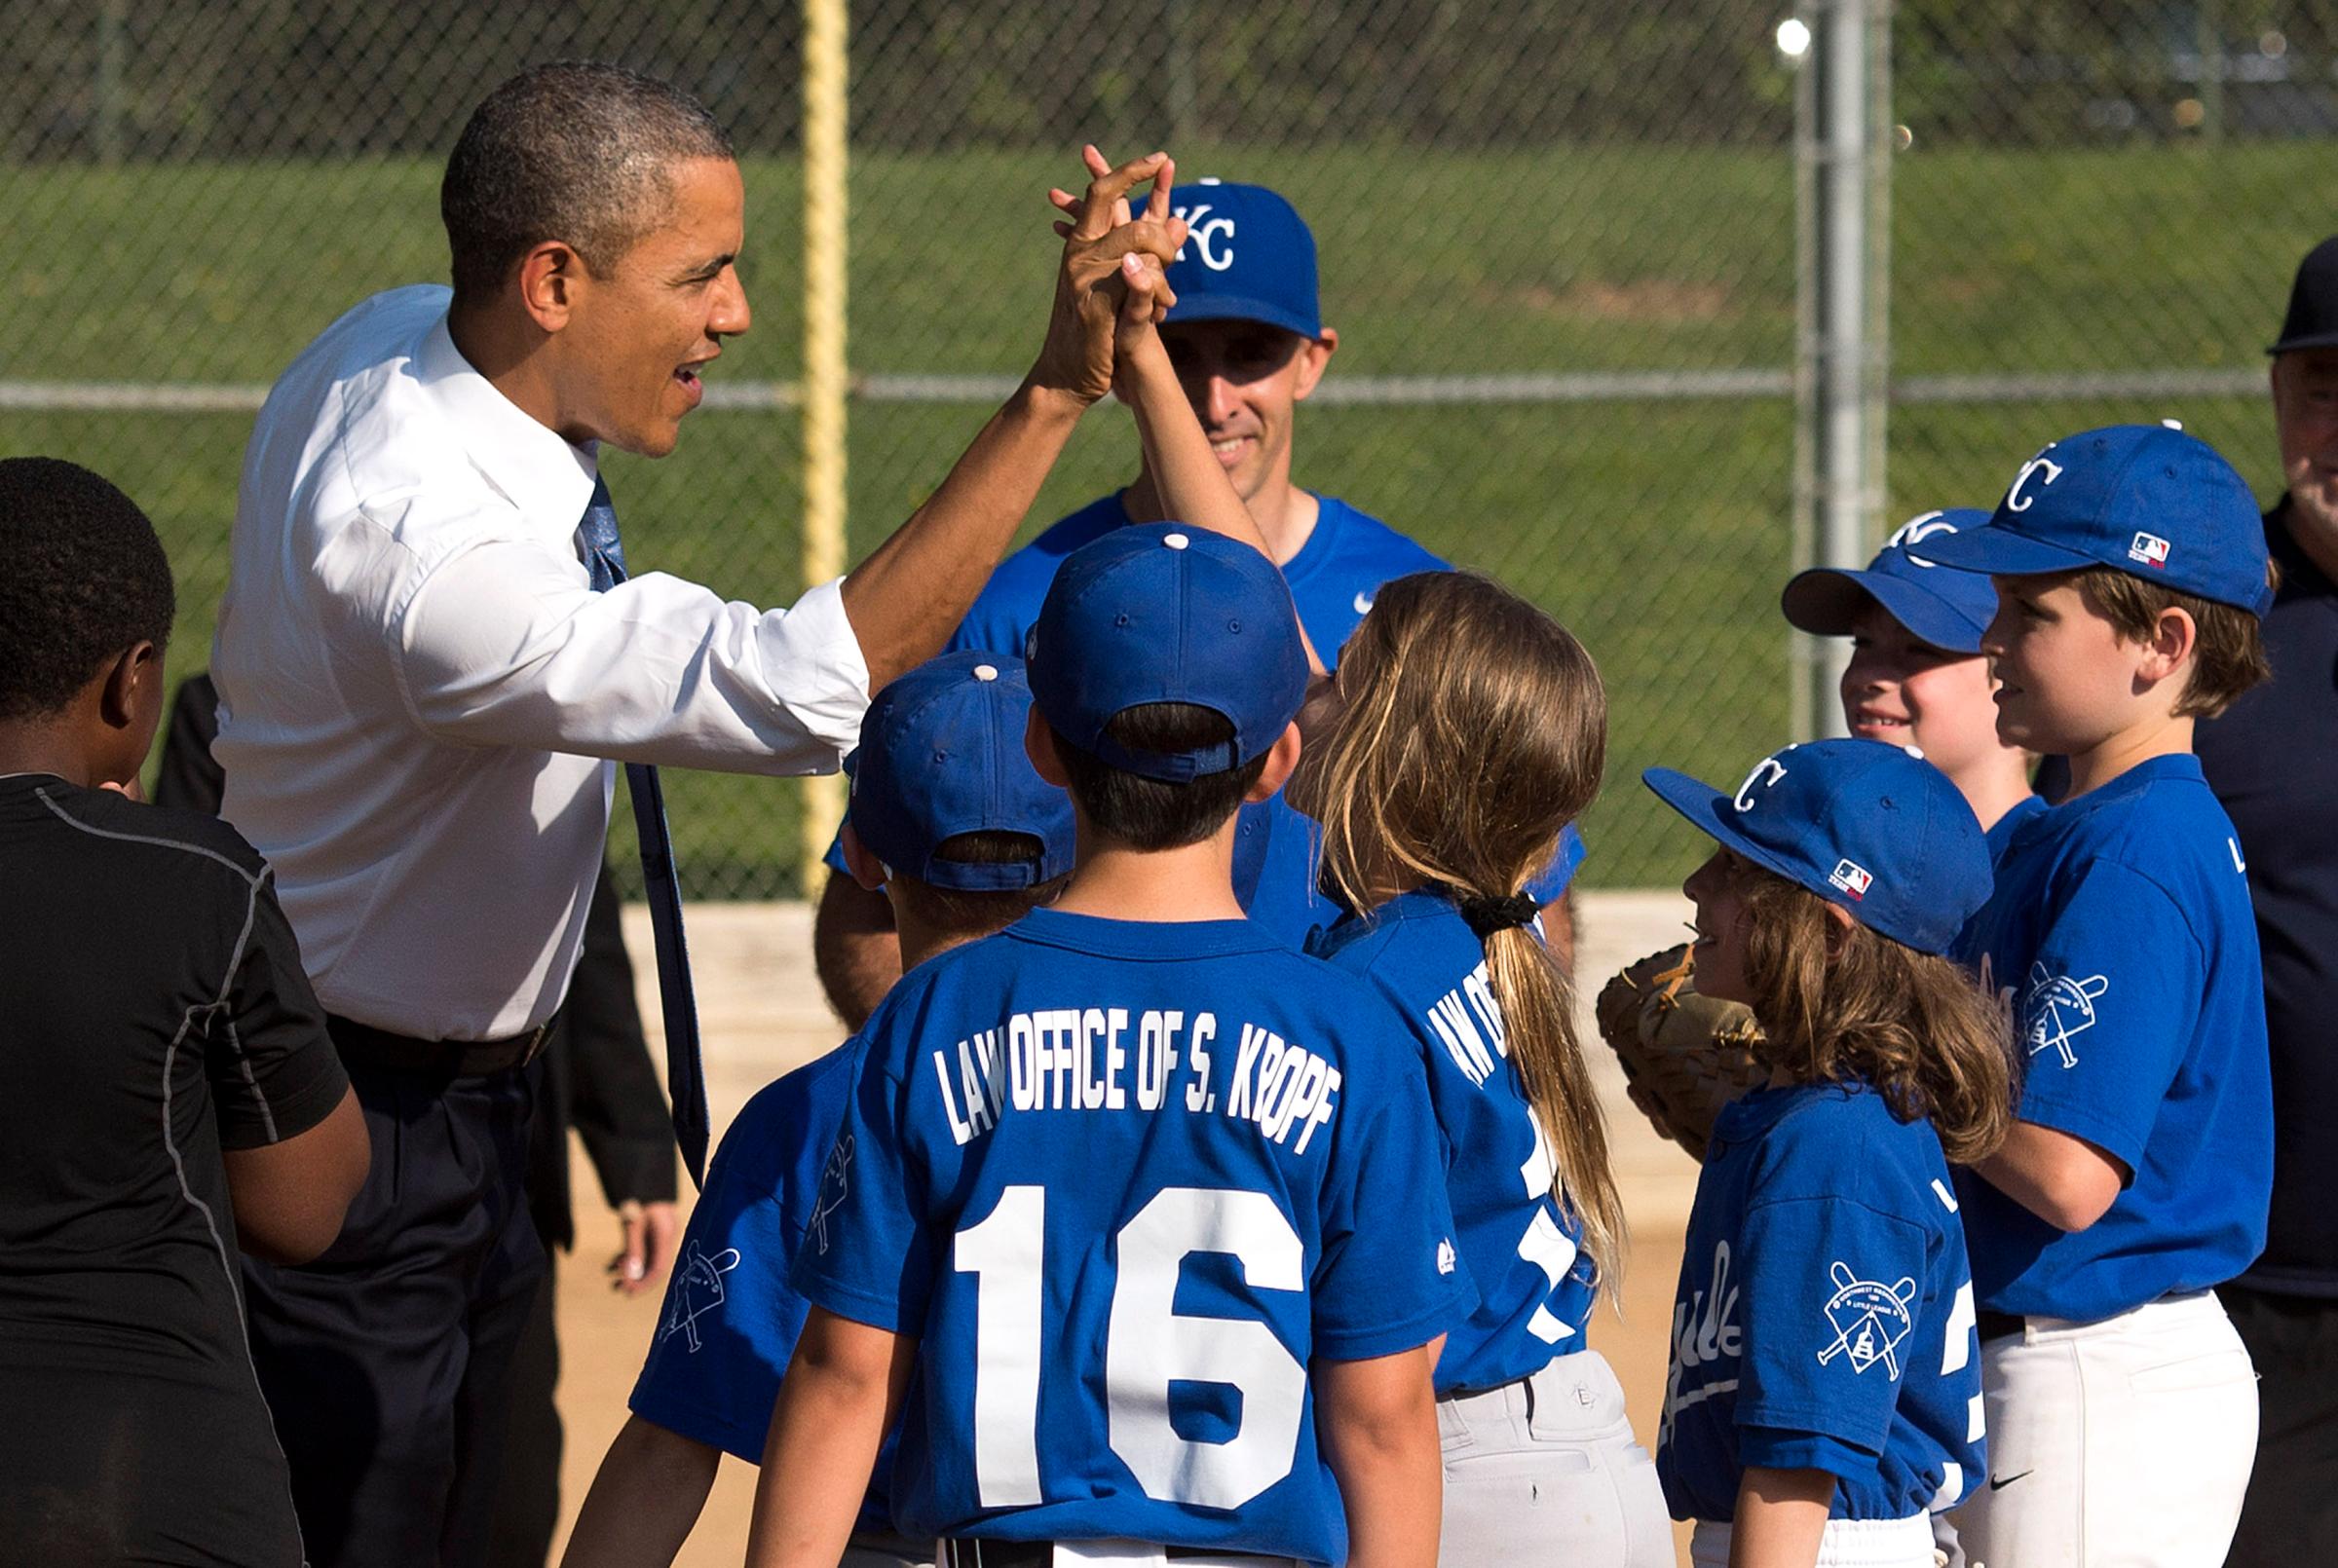 President Barack Obama Visits a Little Leage Baseball Game in Washington, D.C.